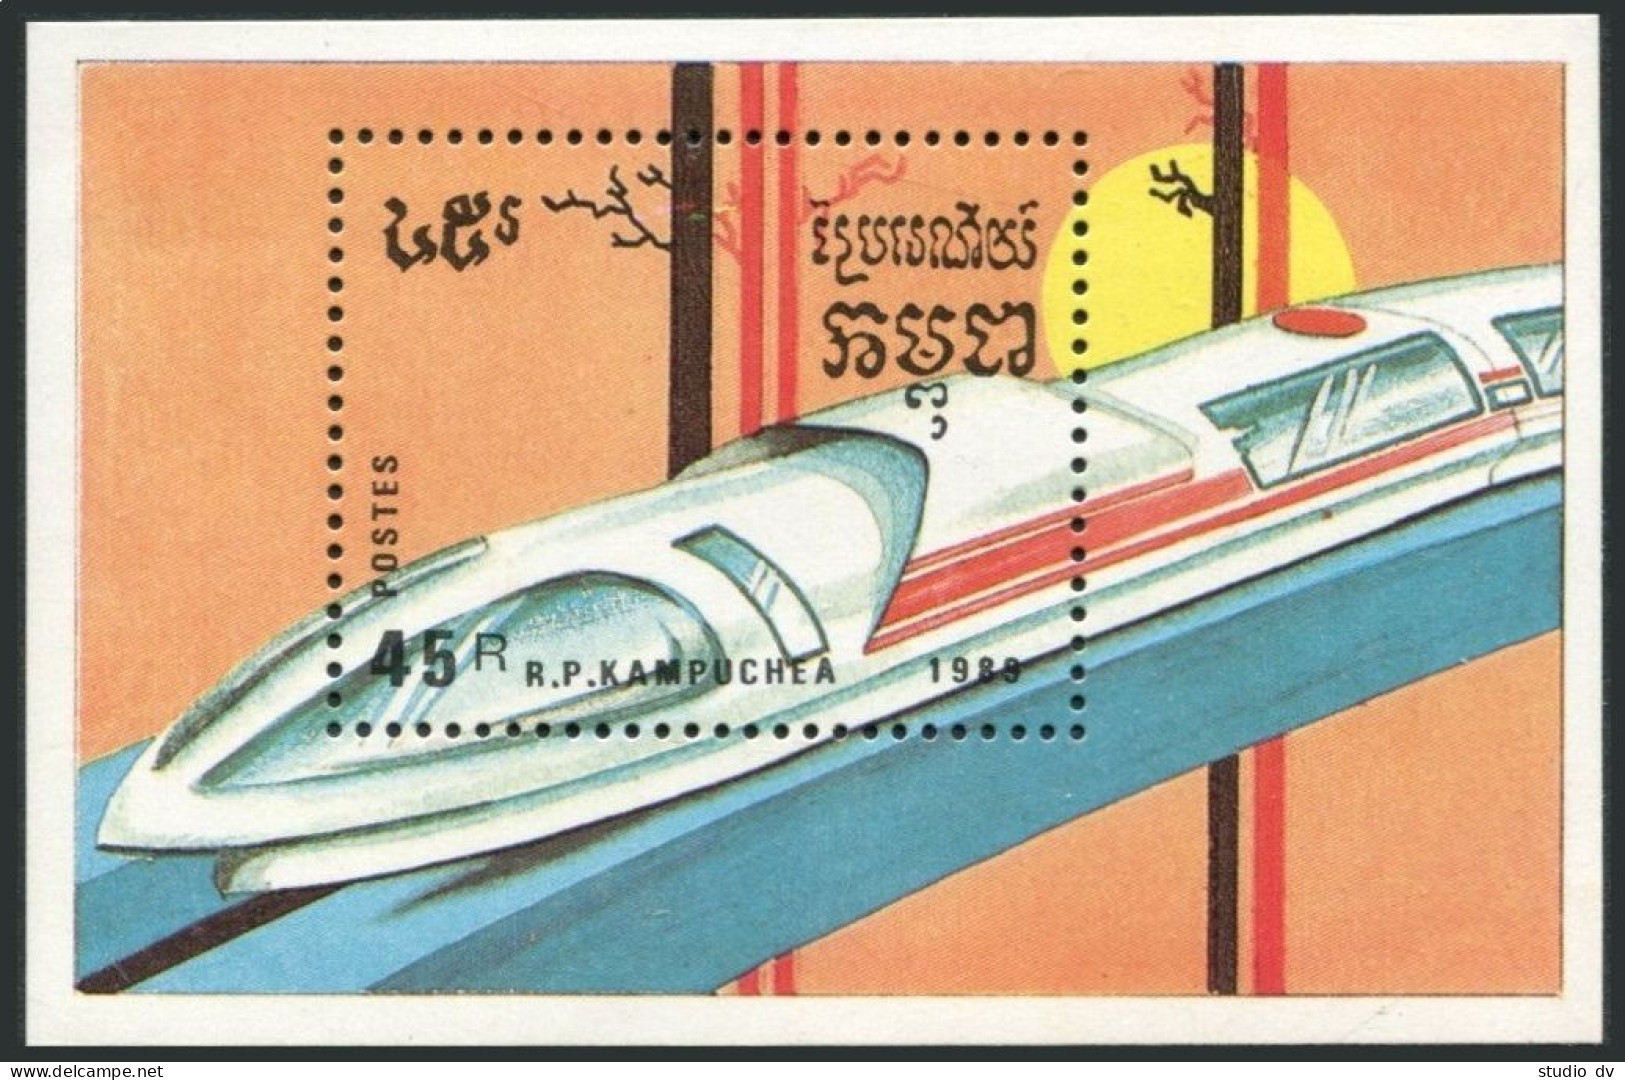 Cambodia 929-935,936,MNH.Michel 1007-1013,Bl.163. Trains,Locomotives 1989. - Cambodja